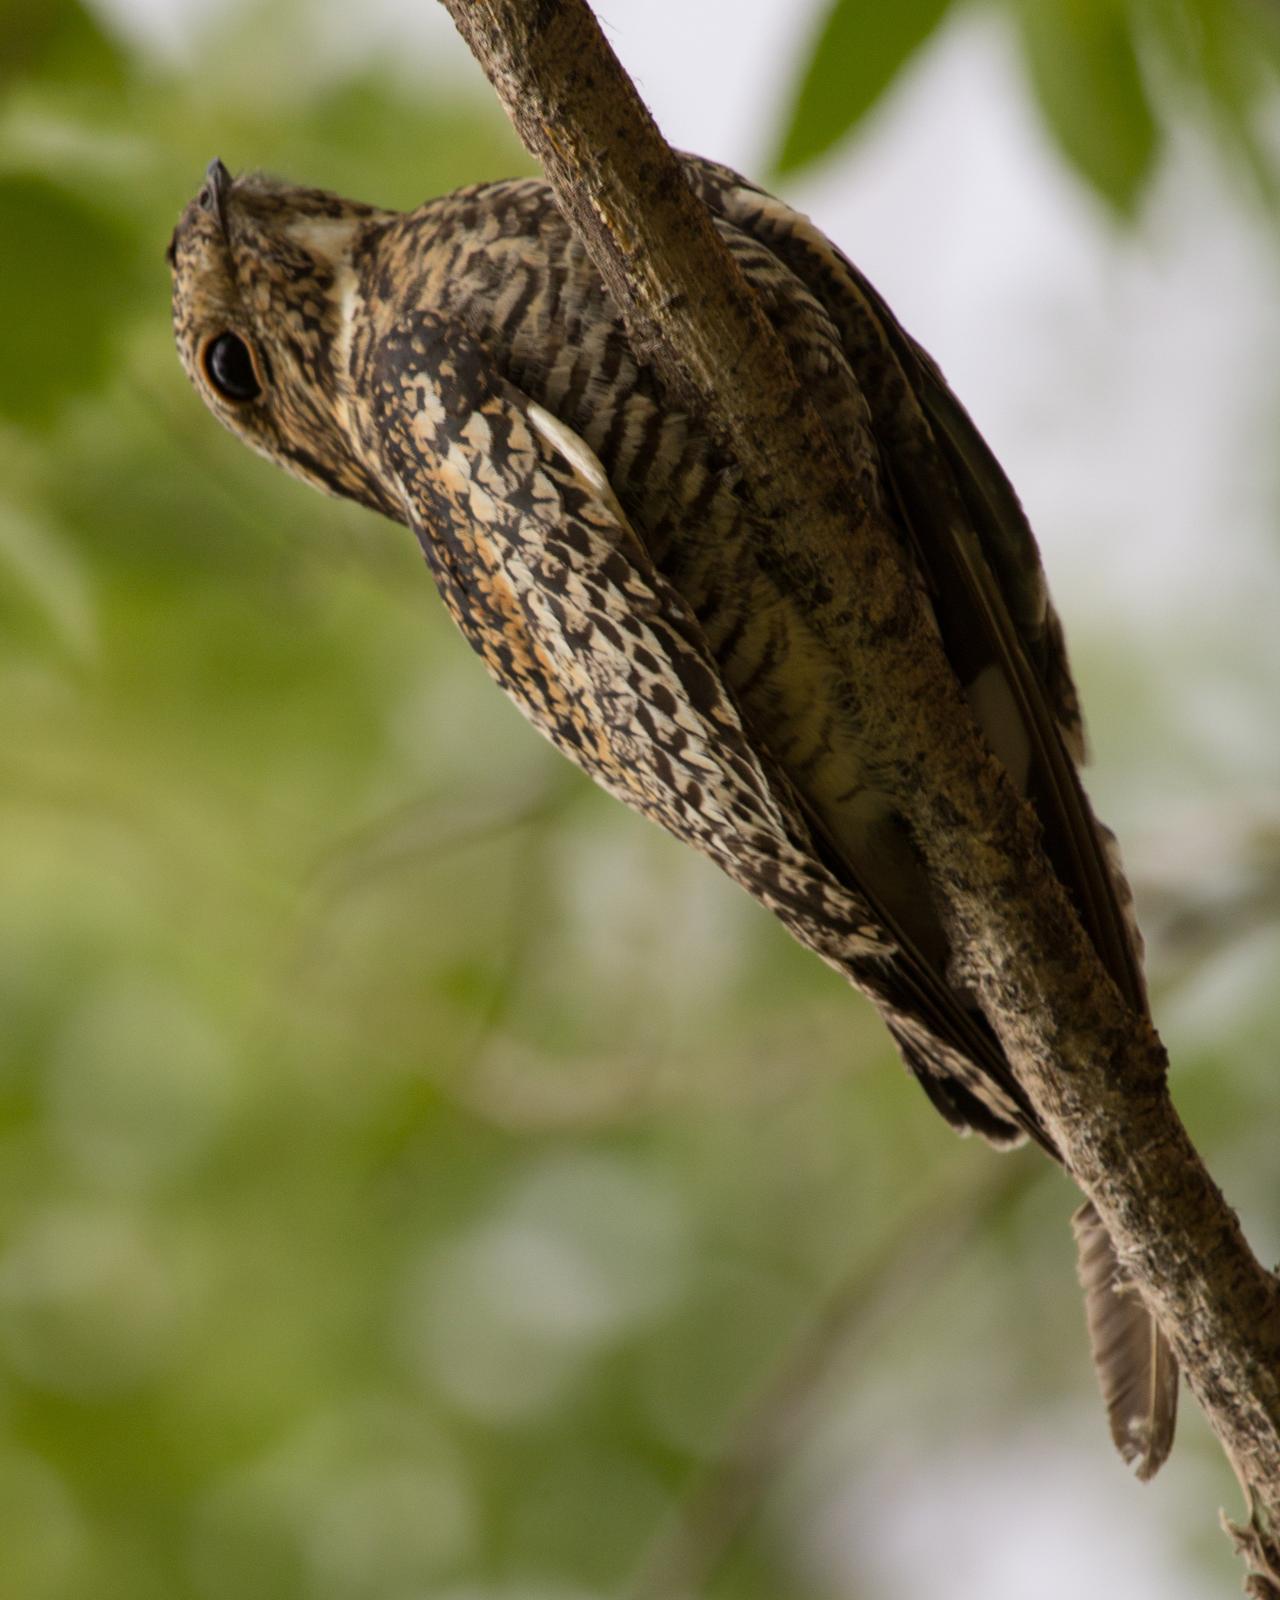 Common Nighthawk Photo by Anita Strawn de Ojeda